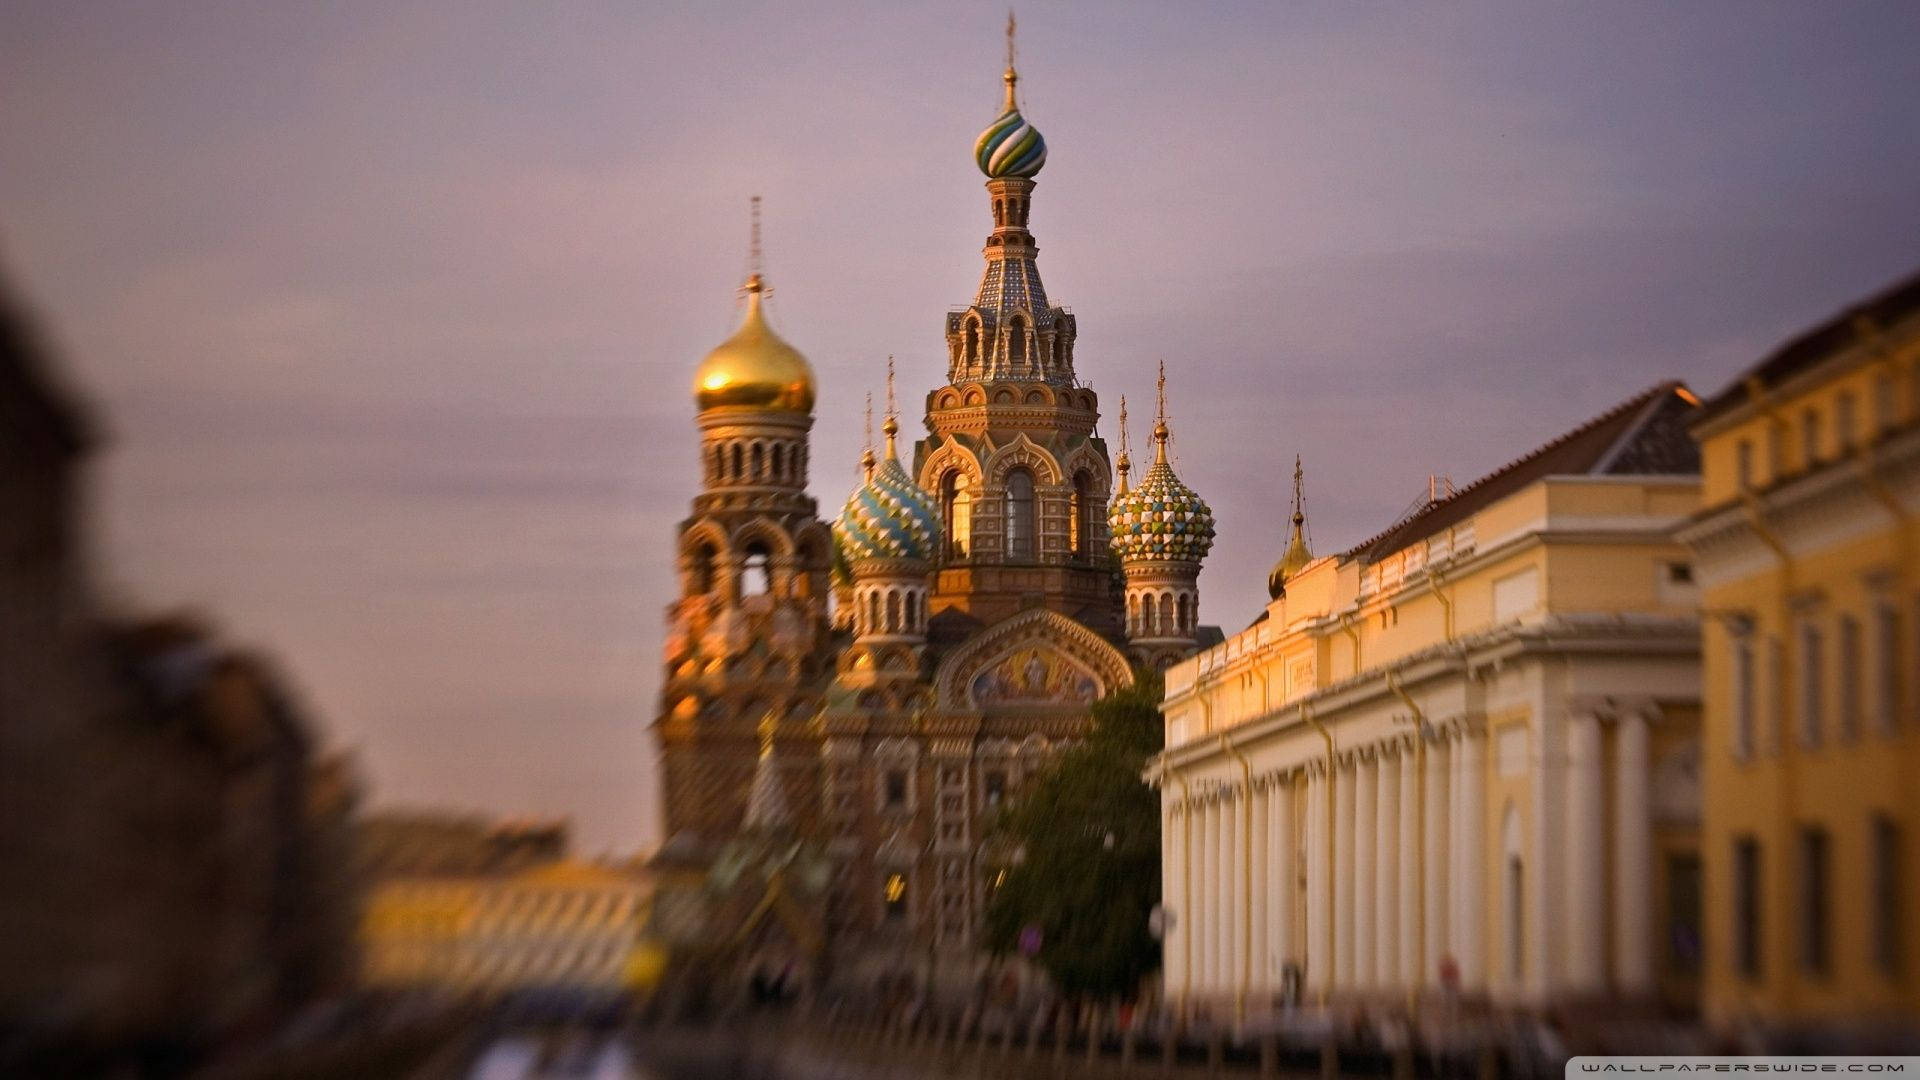 St. Petersburg Church With Blurred Scene Background